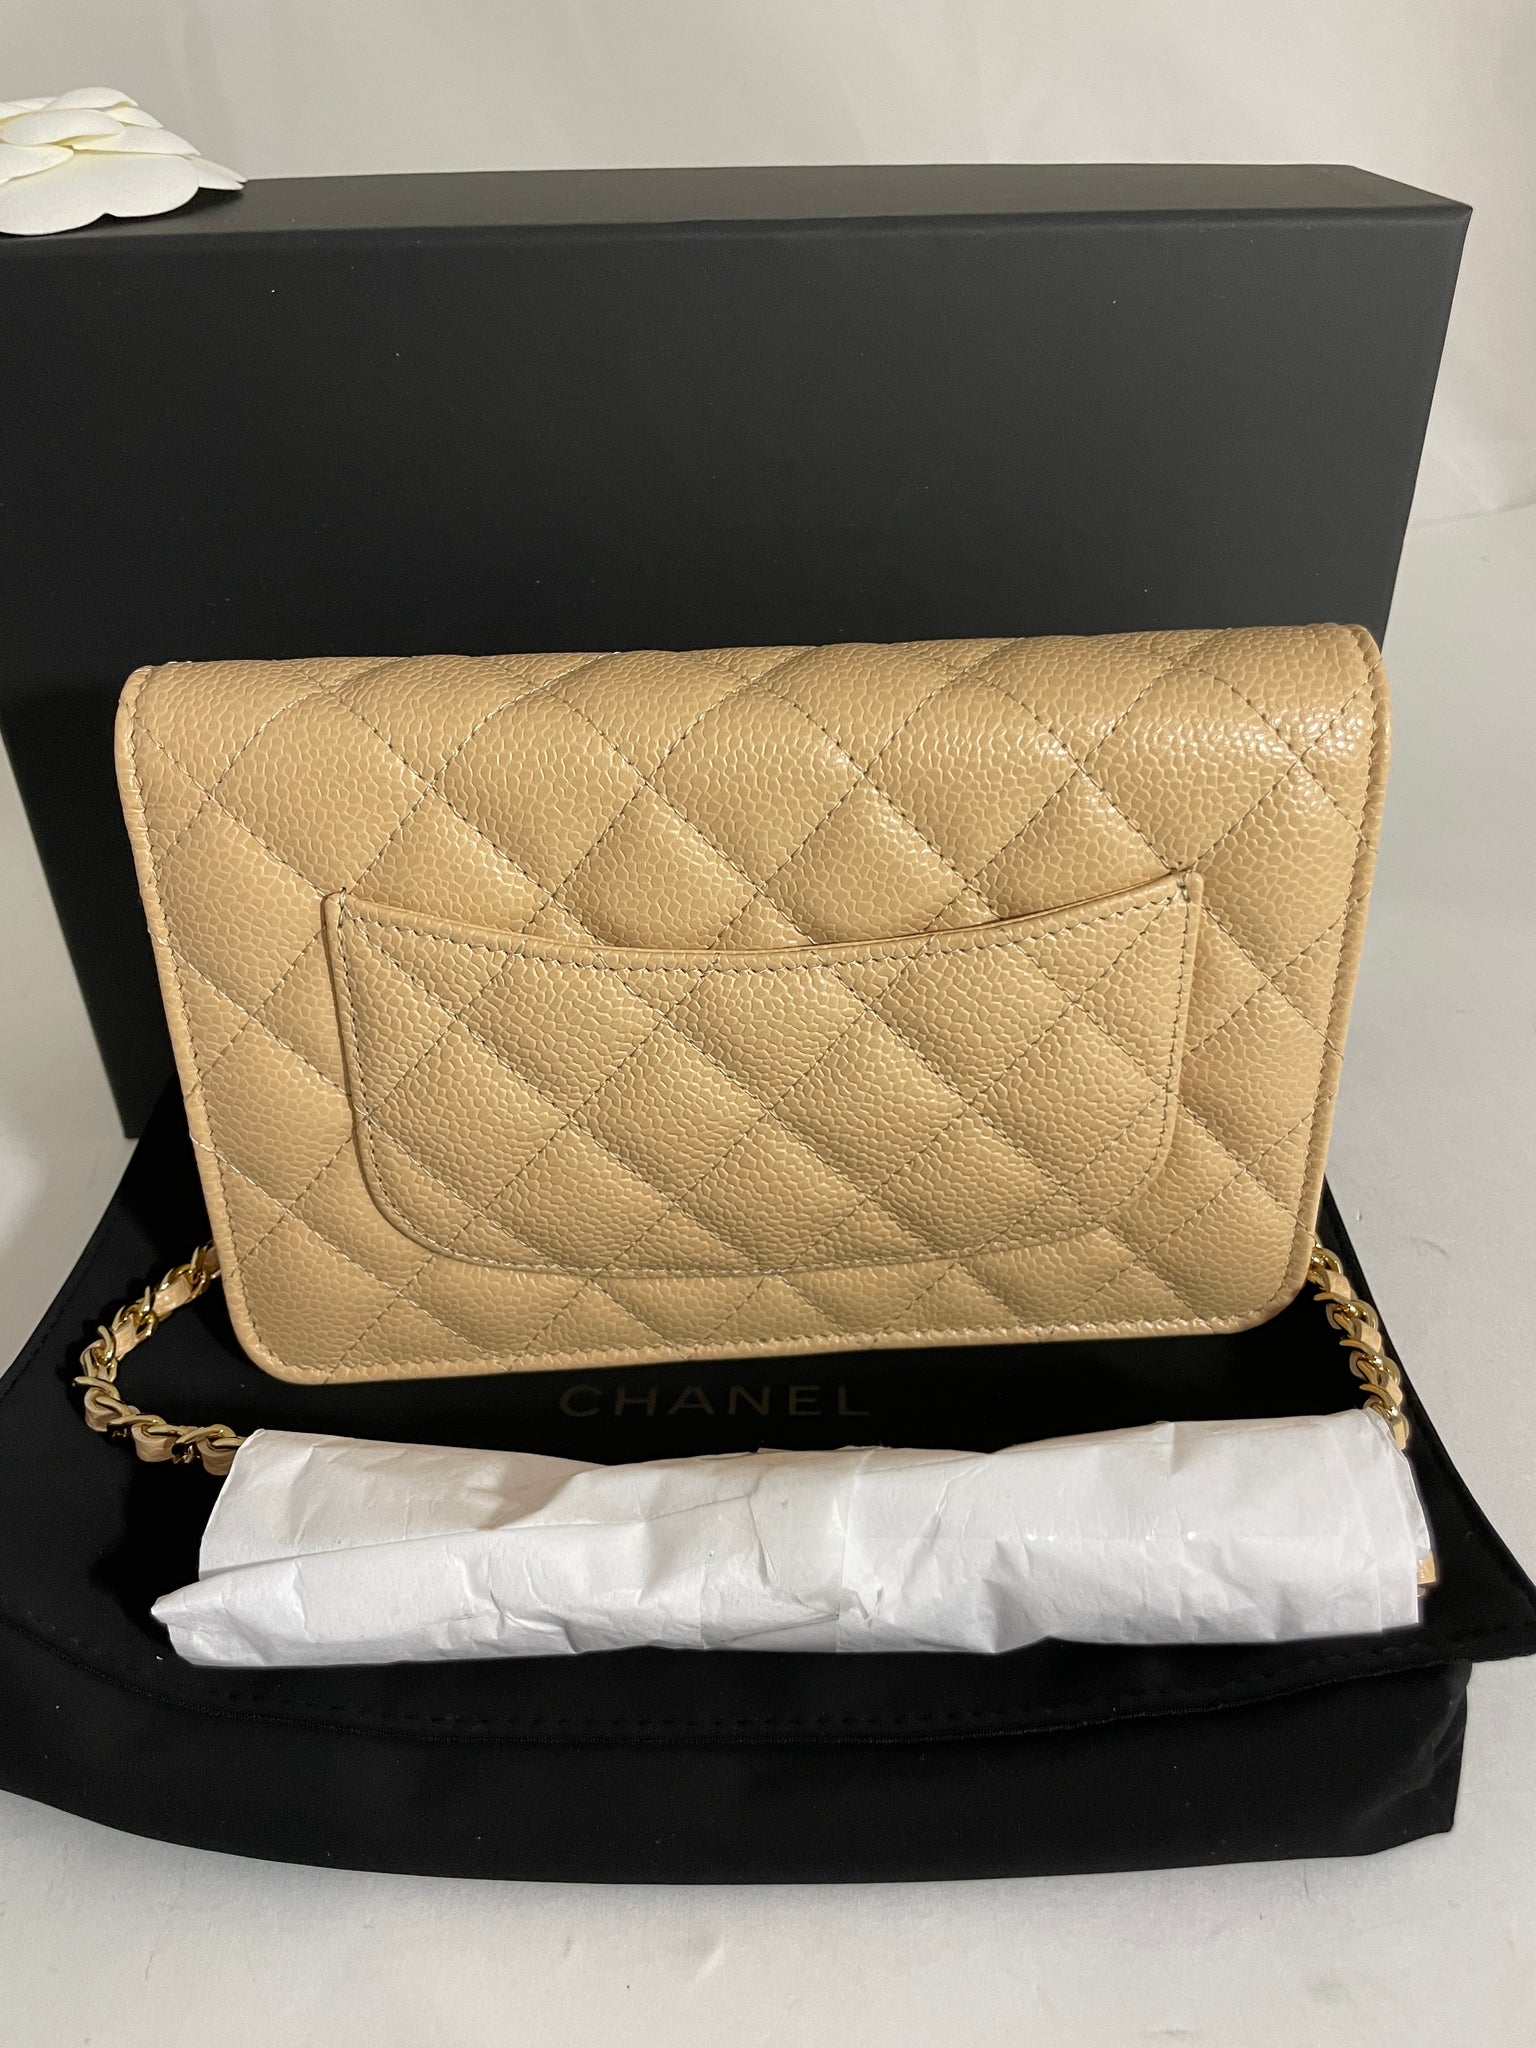 Chanel Classic Beige Caviar WOC Wallet On Chain Handbag